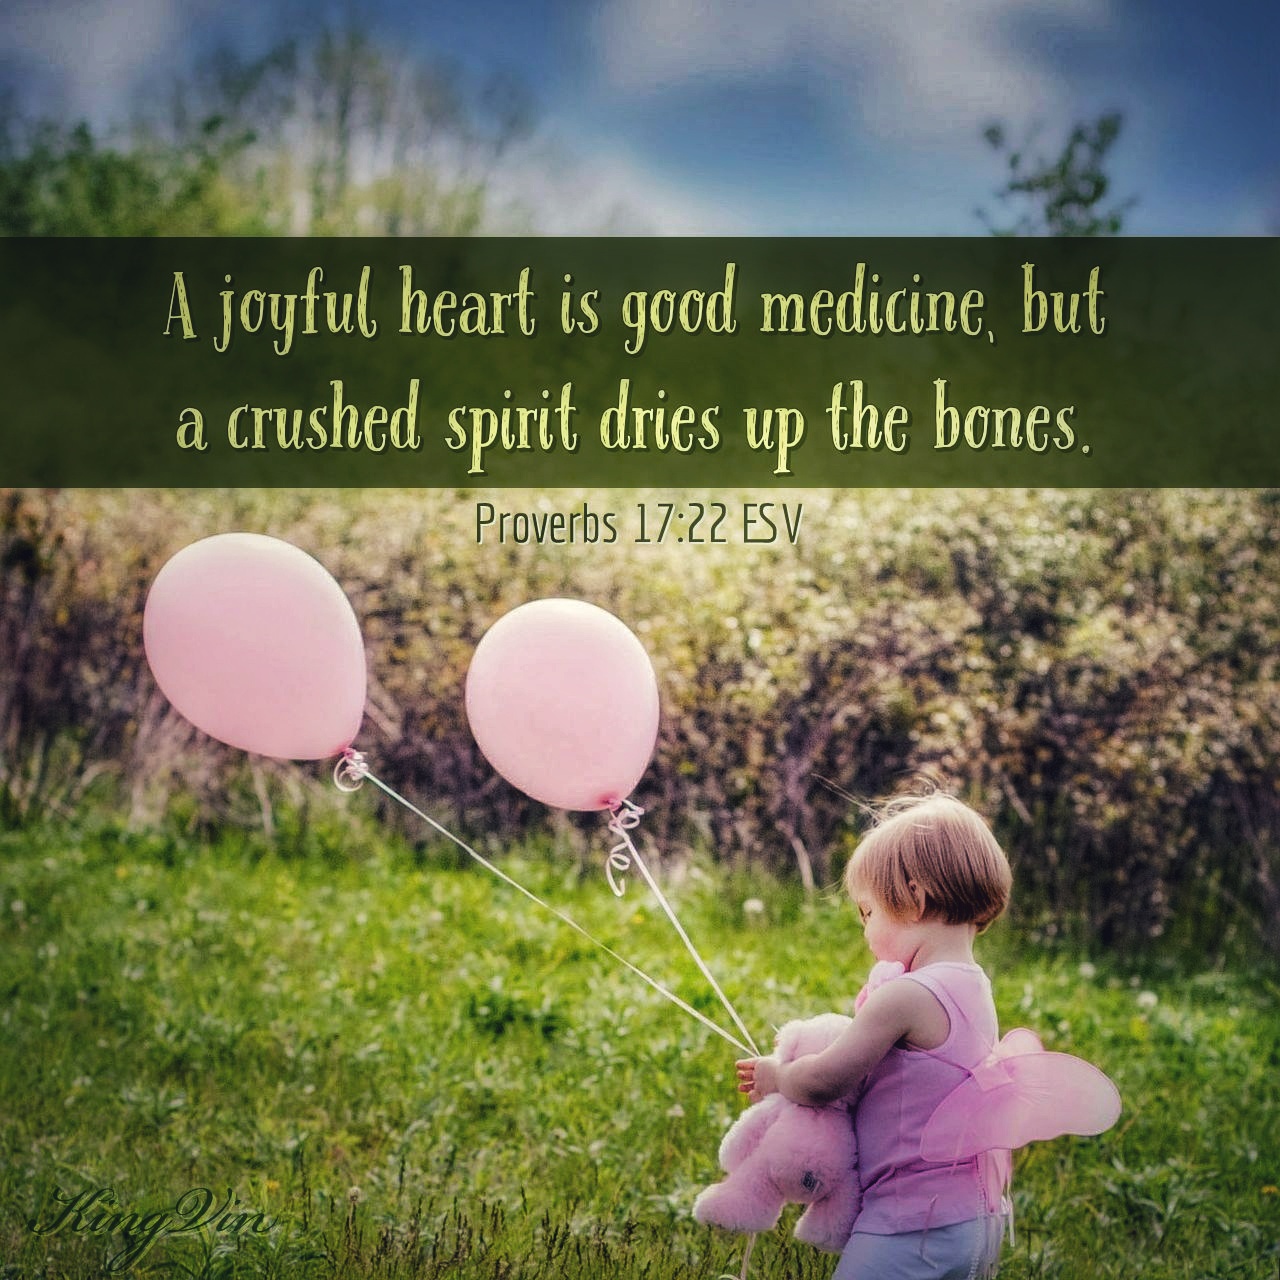 A joyful heart is good medicine, but a crushed spirit dries up the bones. Proverbs 17:22 ESV